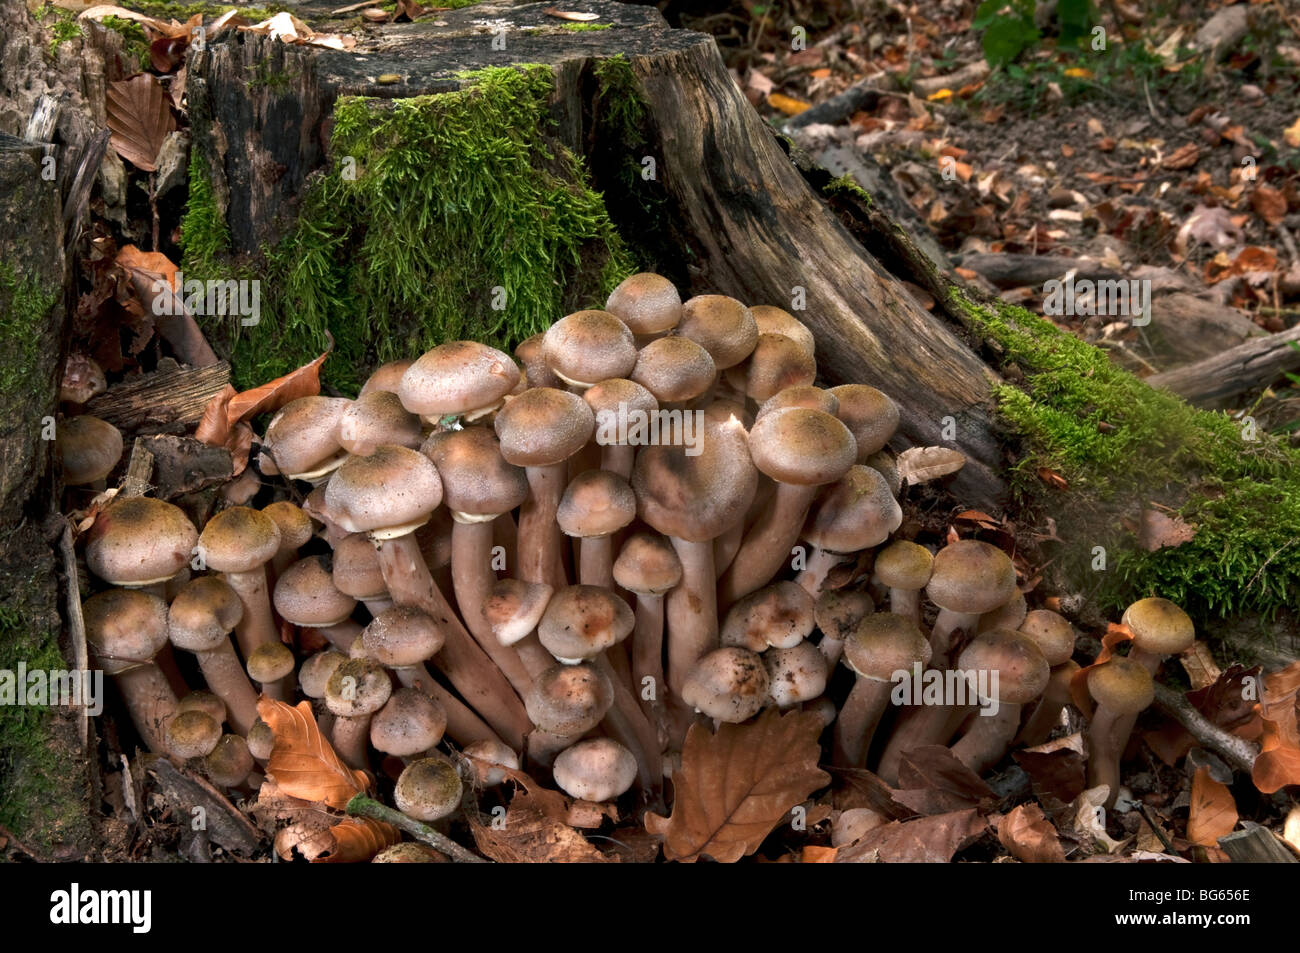 Honey Fungus, Bootlace Fungus (Armillaria mellea). Mushrooms on a tree stump. Stock Photo